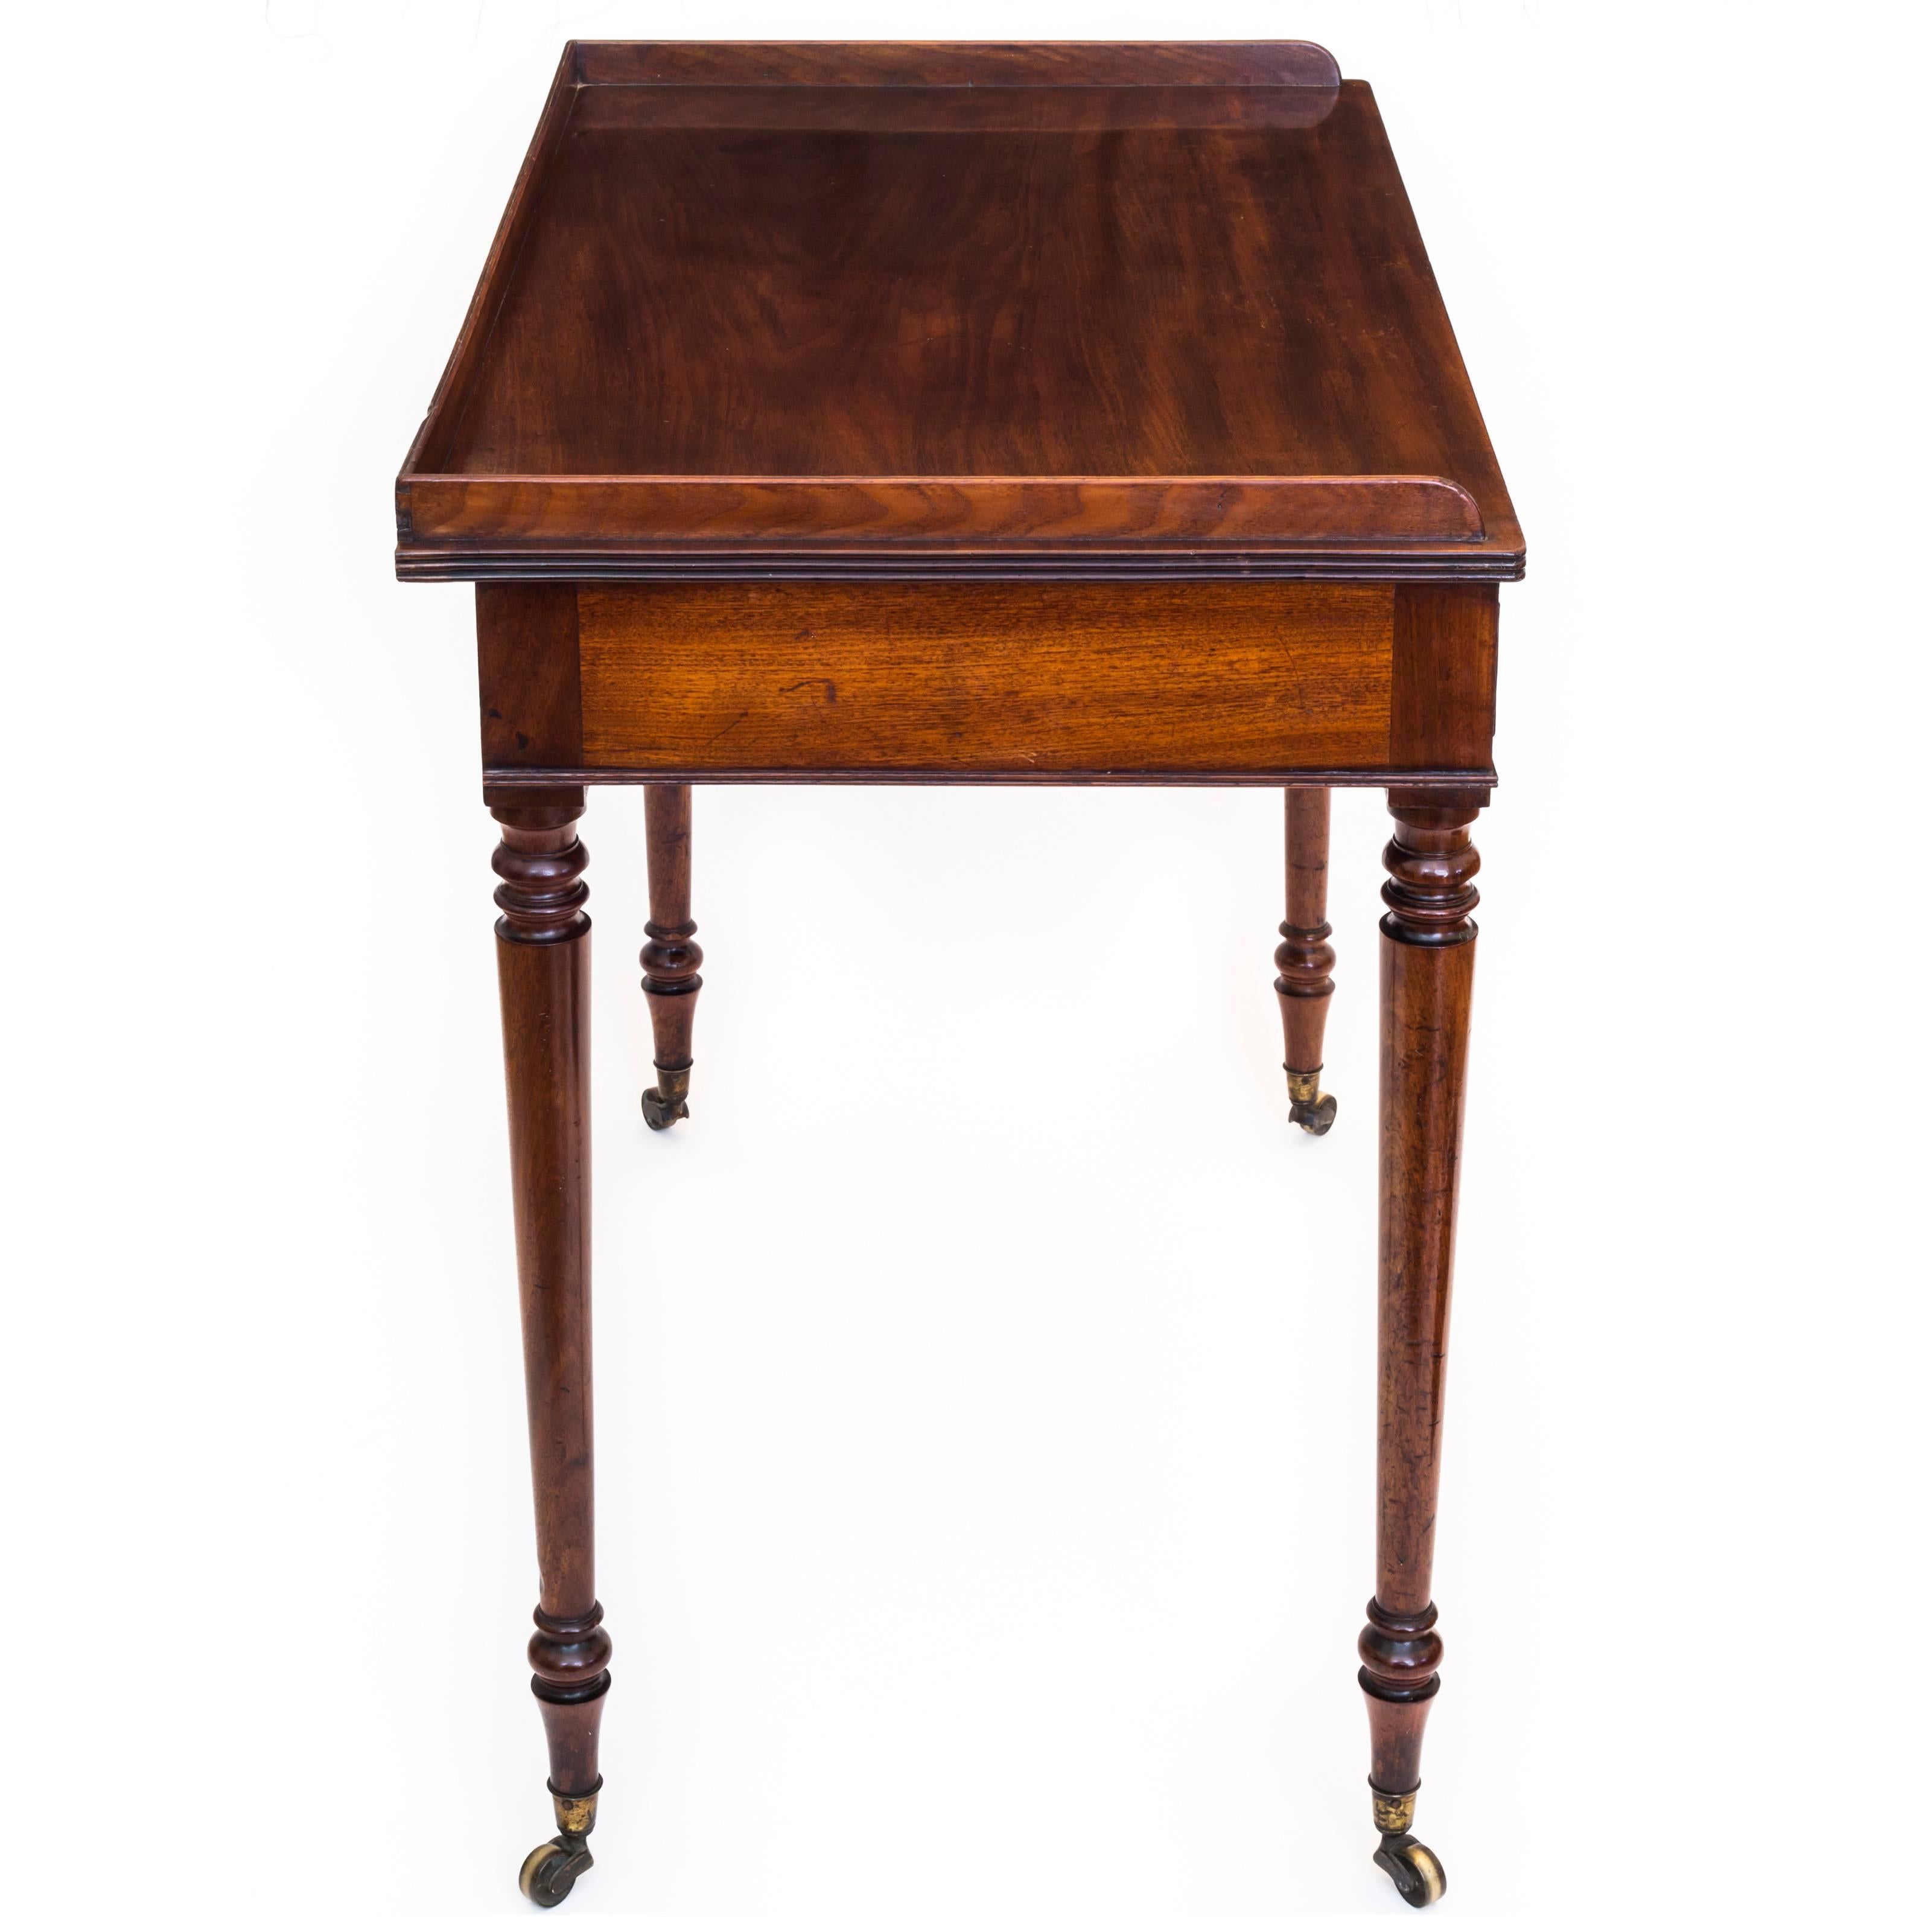 Early 19th Century English Regency Gillows Mahogany Small Desk or Dressing Table 1